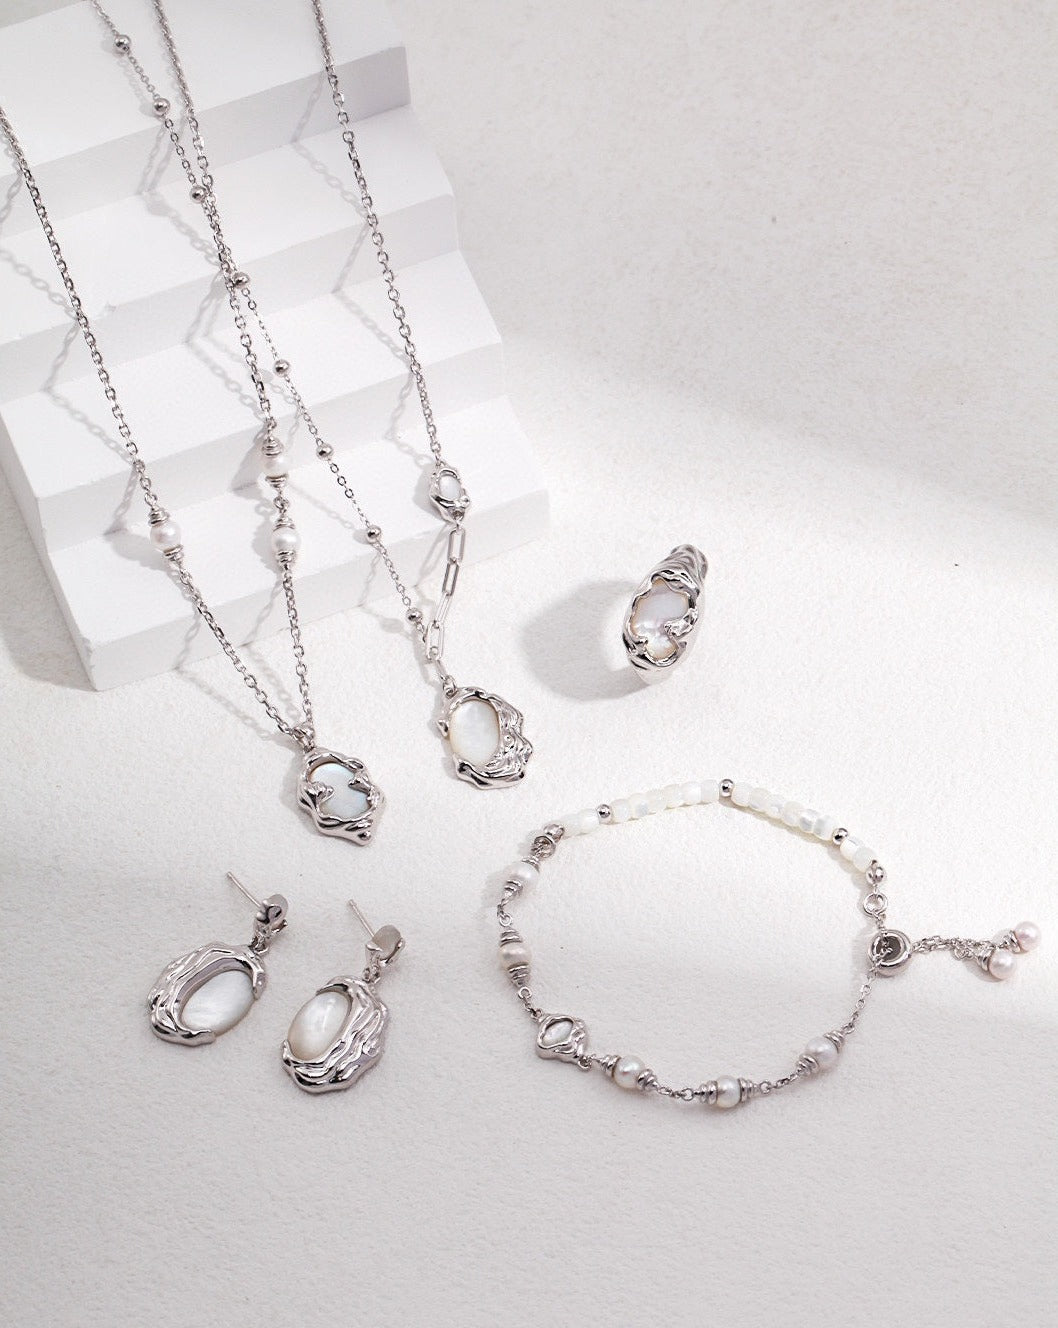 fashion-jewelry-minimalist-jewelry-design-jewelry-statement-necklace-pearl-earring-bracelet-rings-gold-coated-silver-bijoux-retro-gold-jewelry-shell-earrings